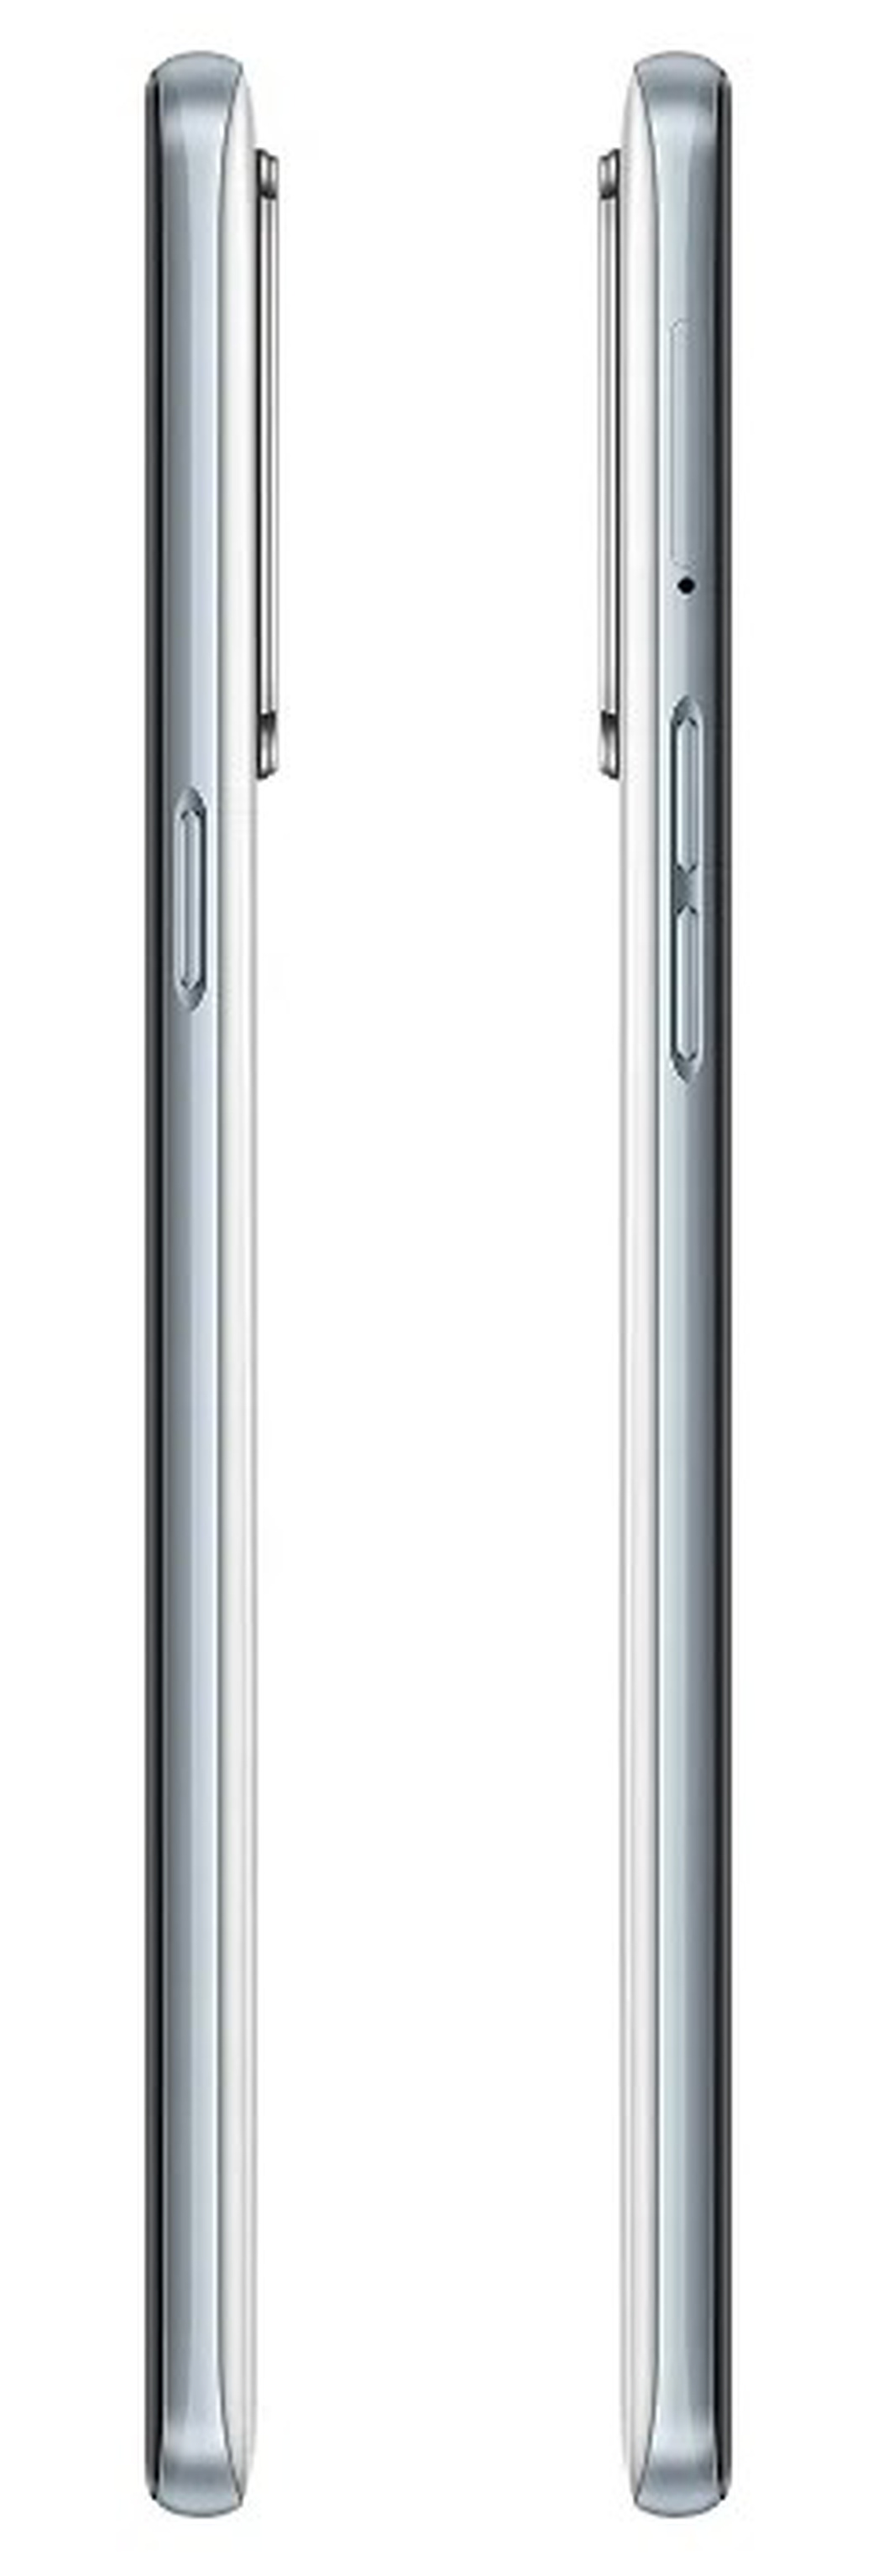 Xiaomi Mi 11i 128 Гб Купить